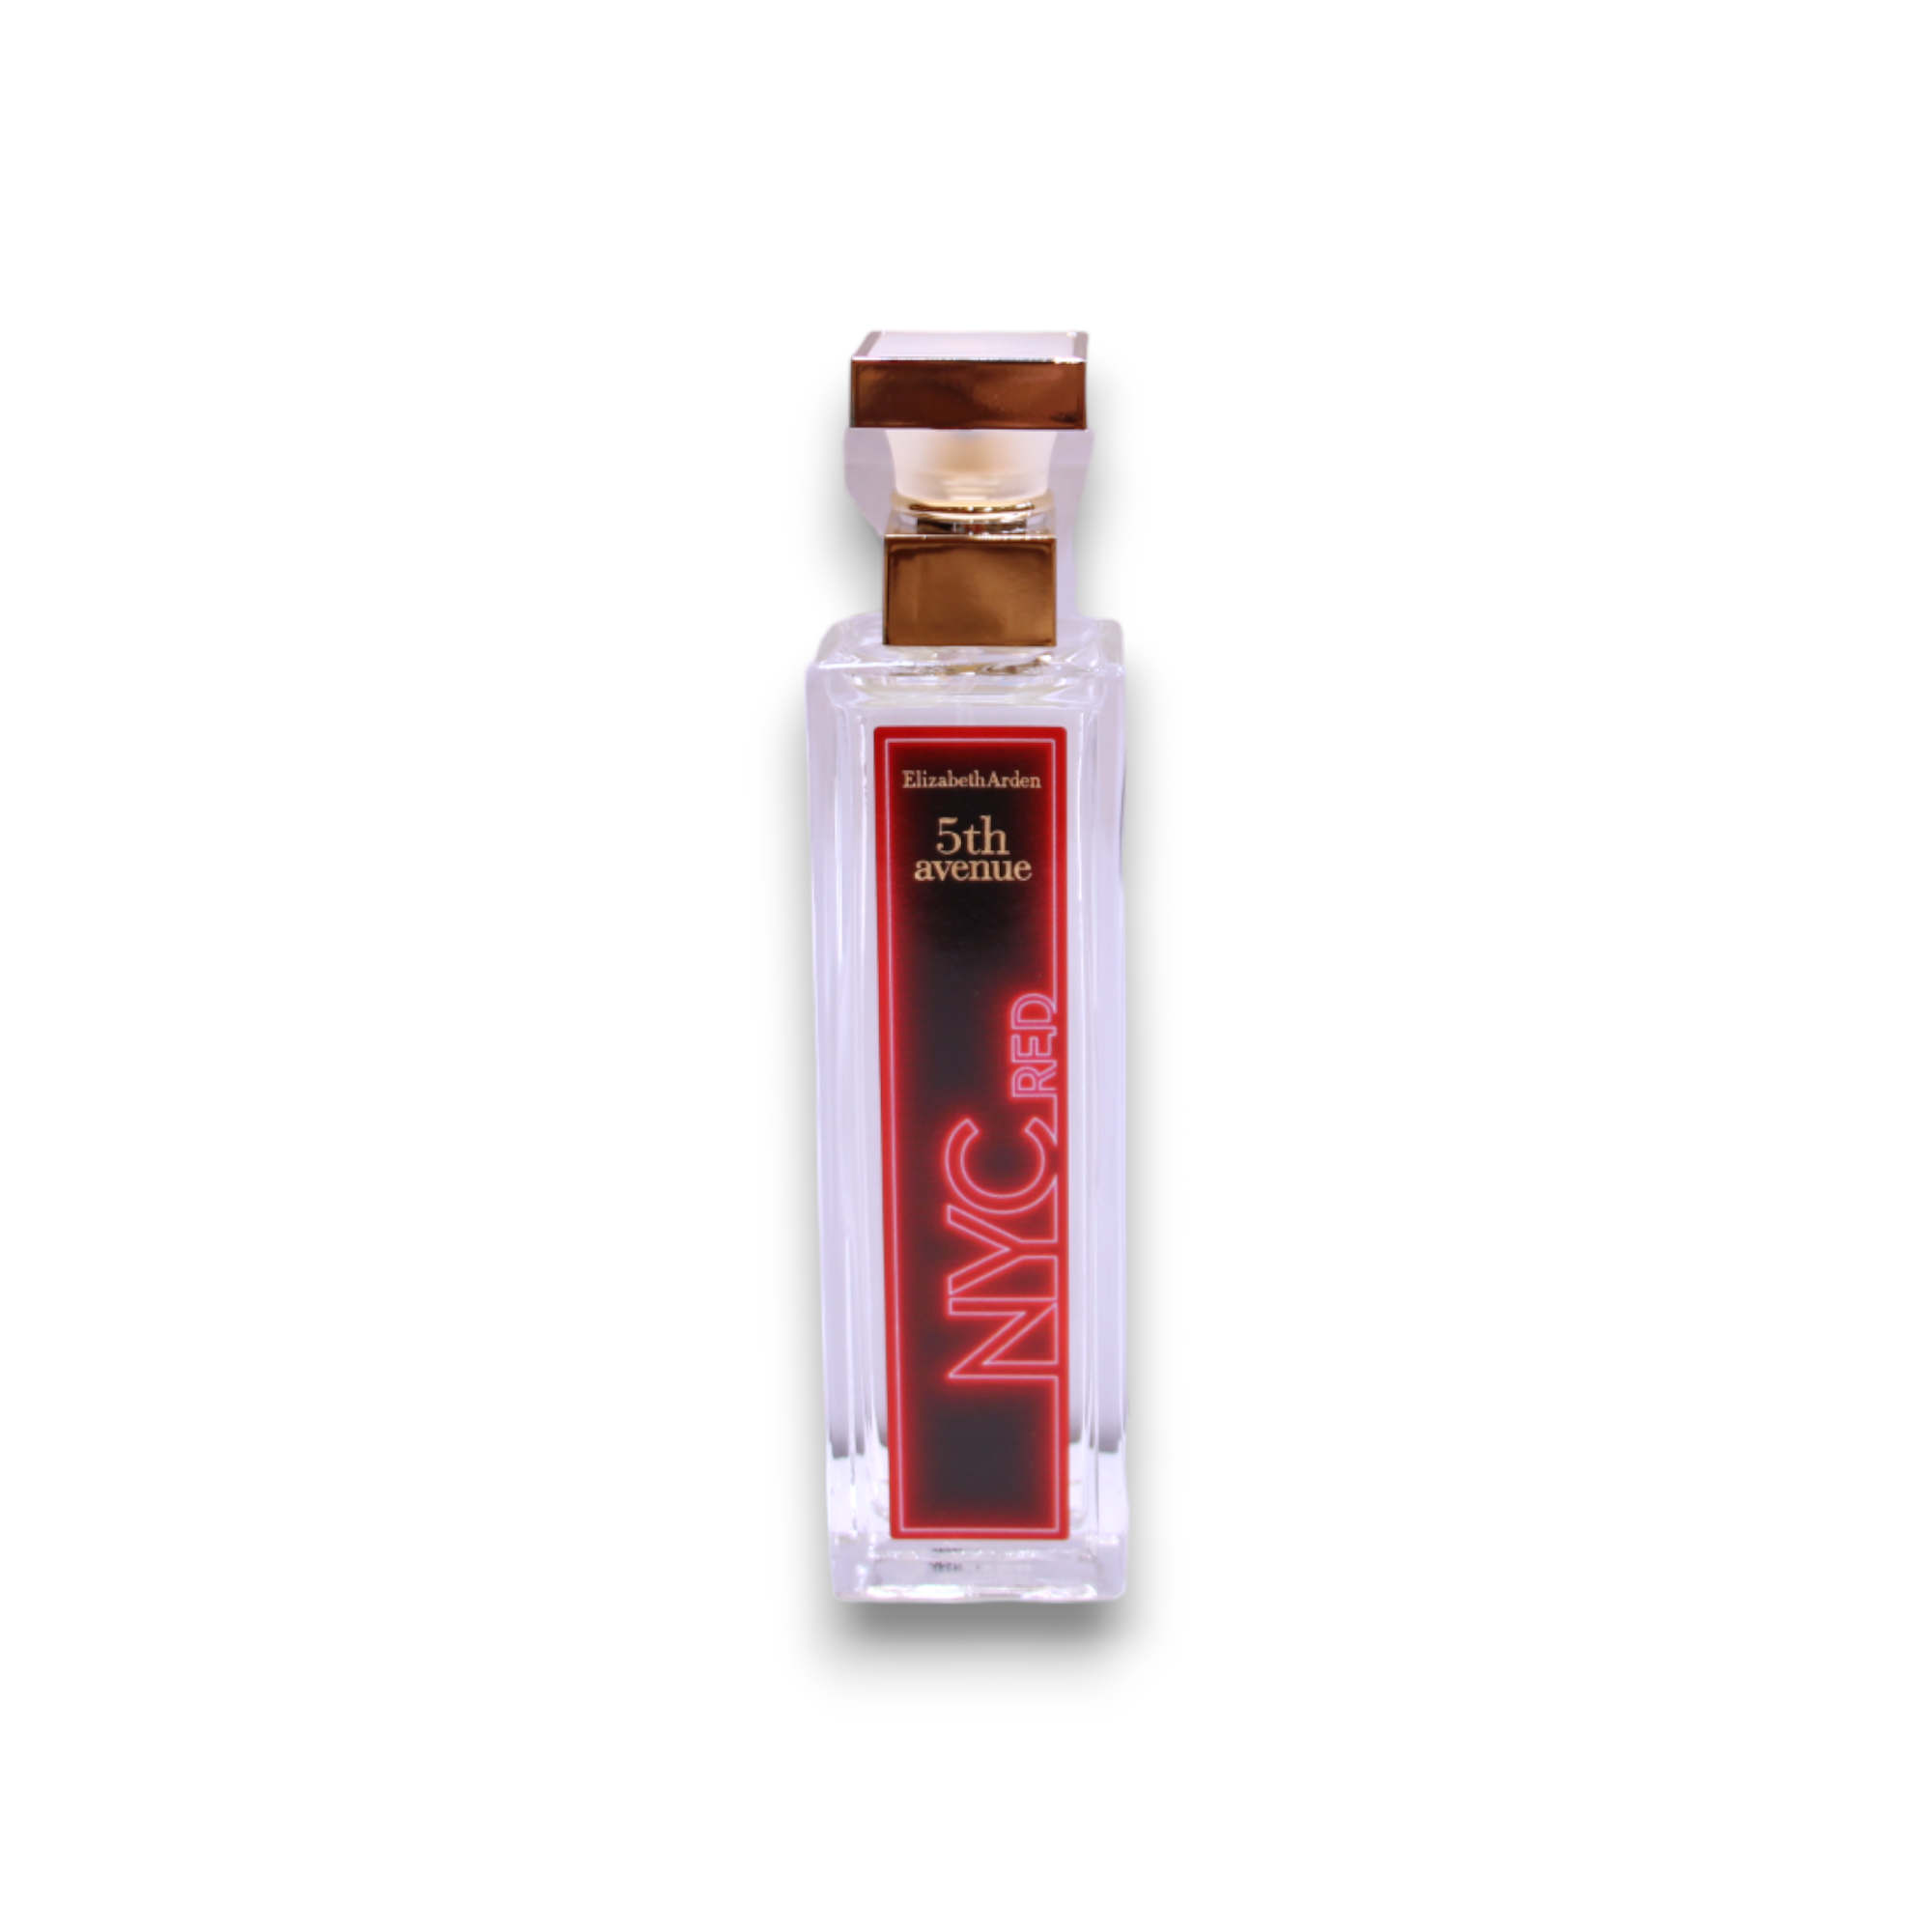 Elizabeth Arden, 5th Avenue NYC Red, Eau De Parfum, For Women, 75 ml *Tester